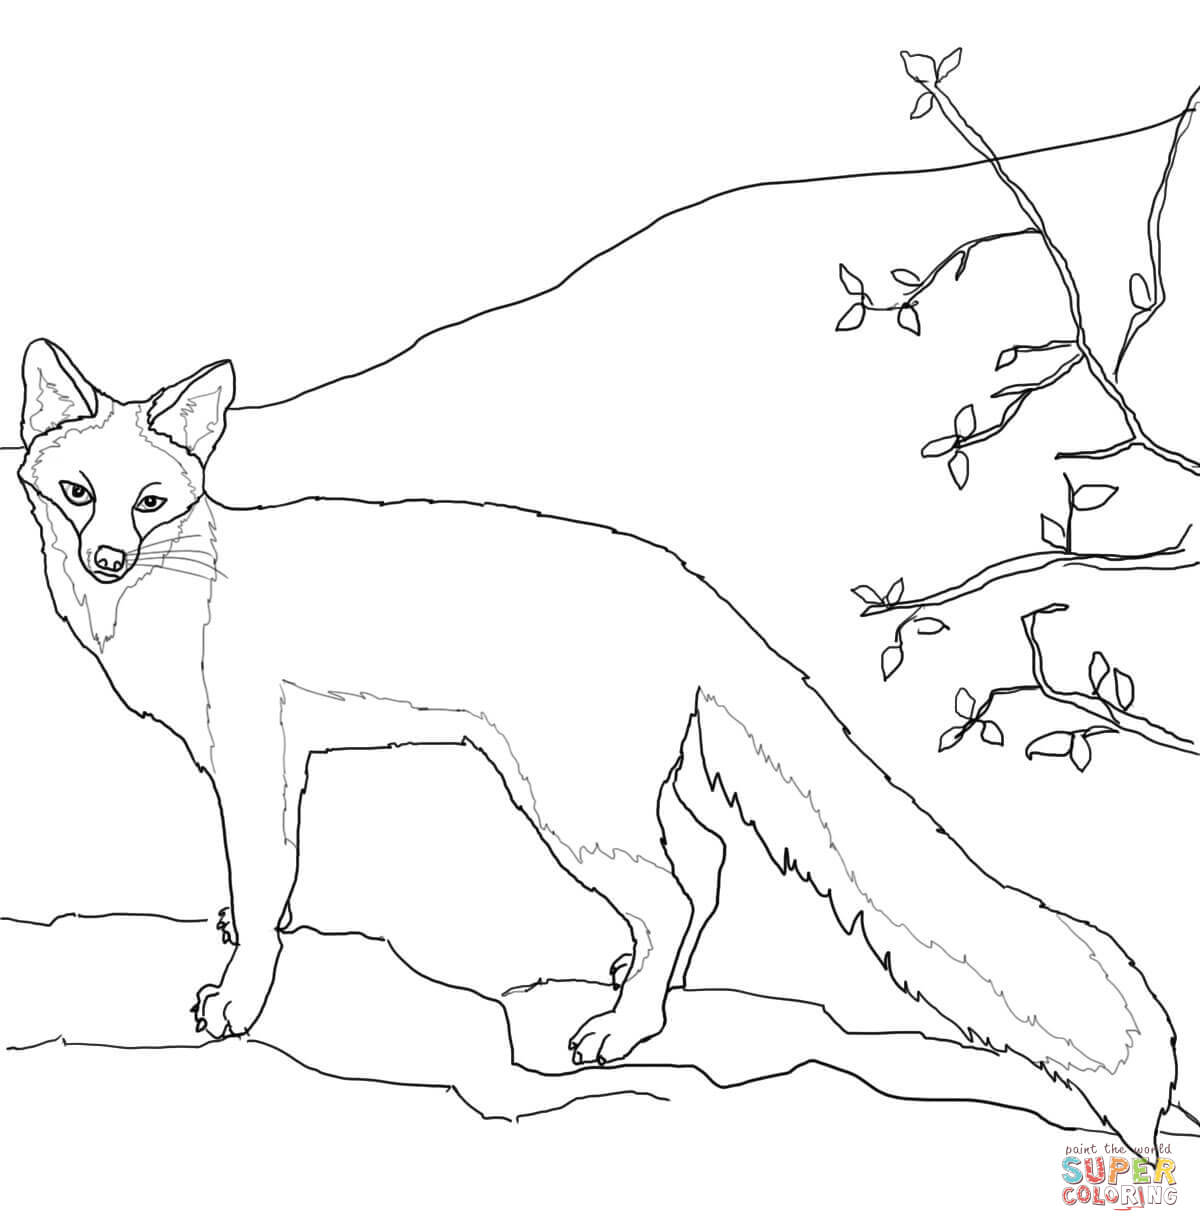 Swift Fox coloring #11, Download drawings